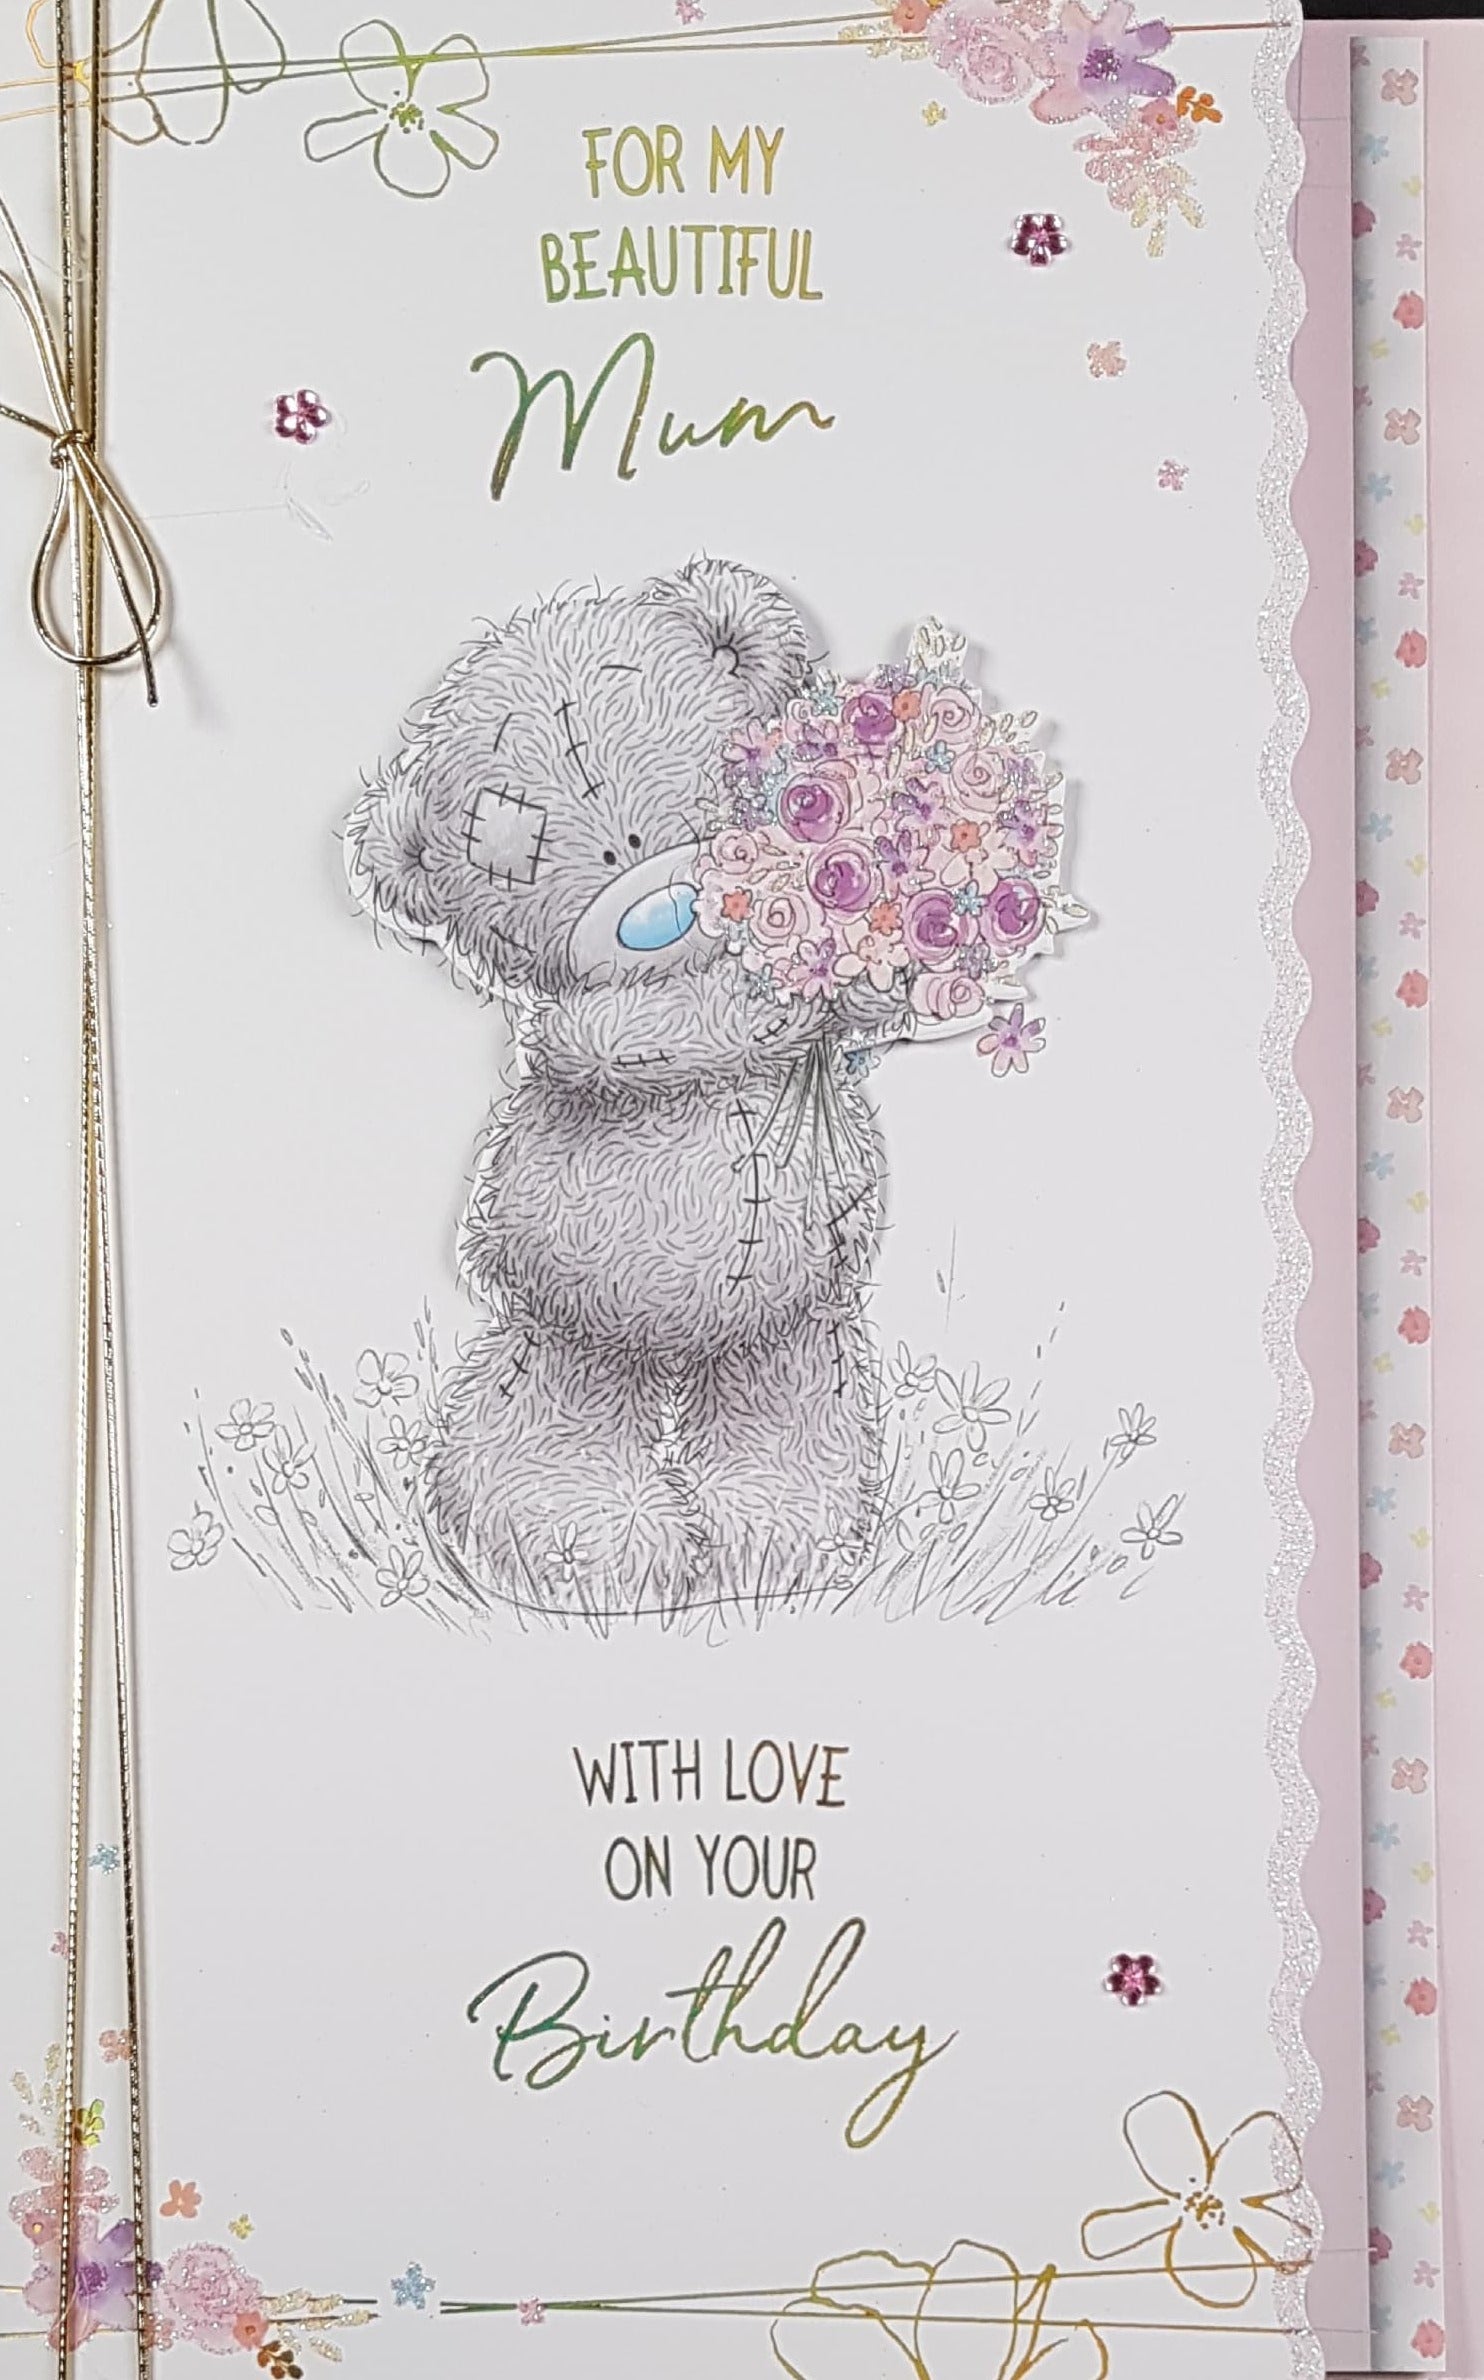 Birthday Card - Mum / Cute Teddy Bear Holding Pink Flowers